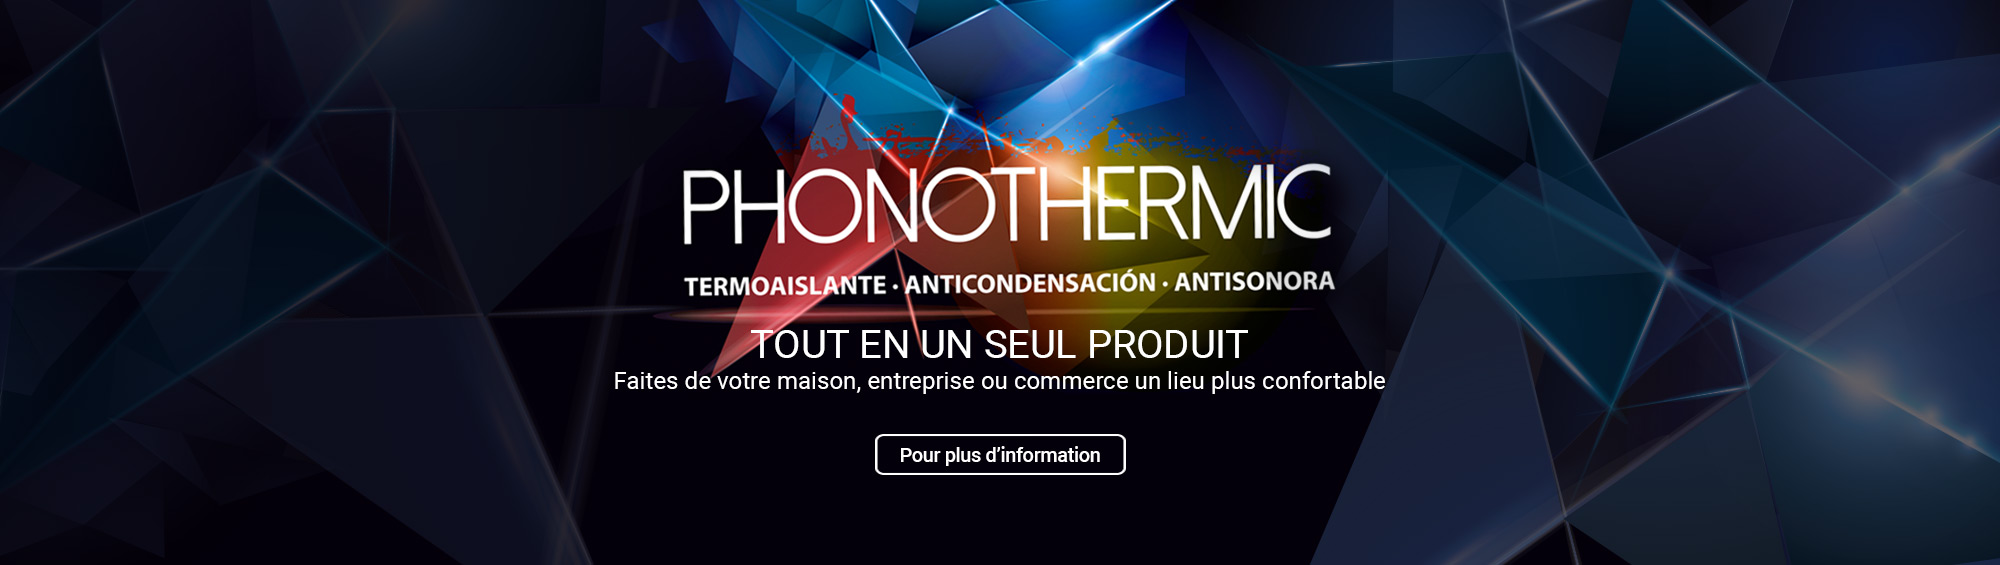 Phonotermic